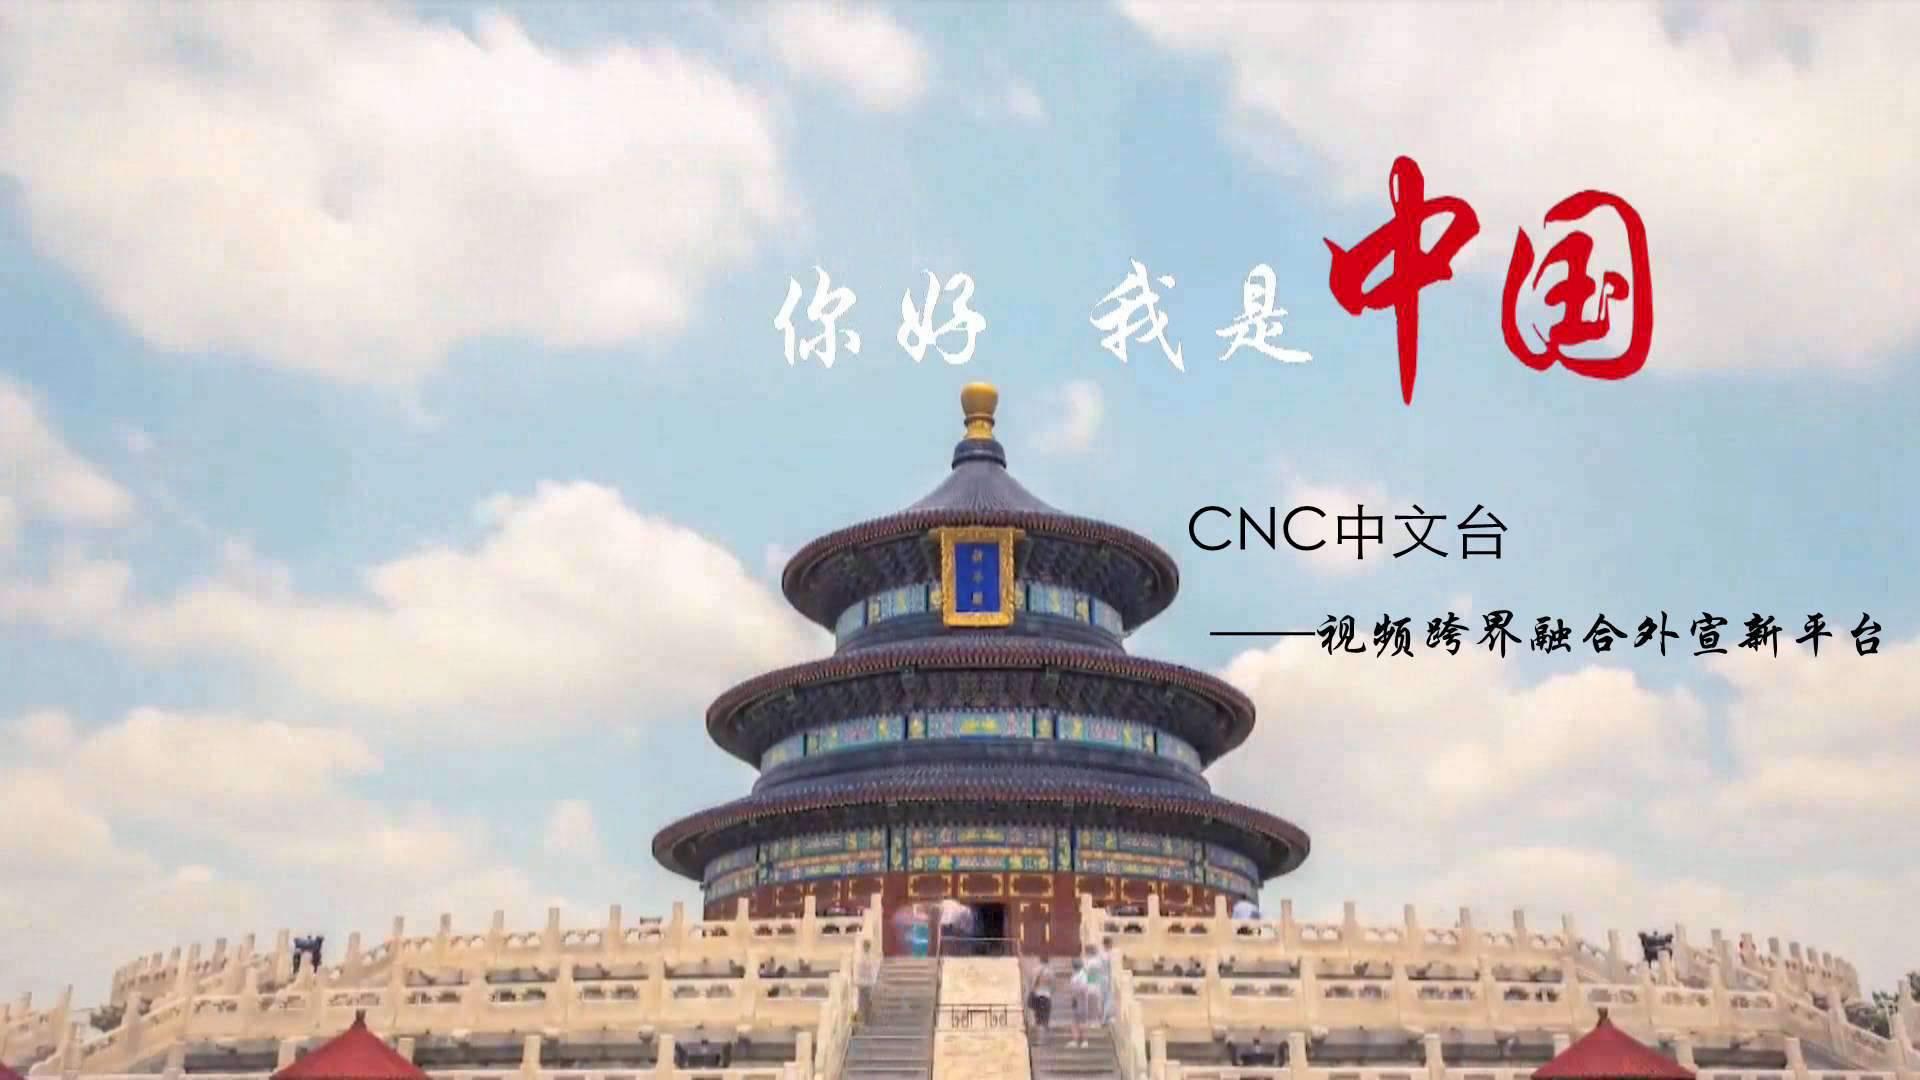 CNC中文台